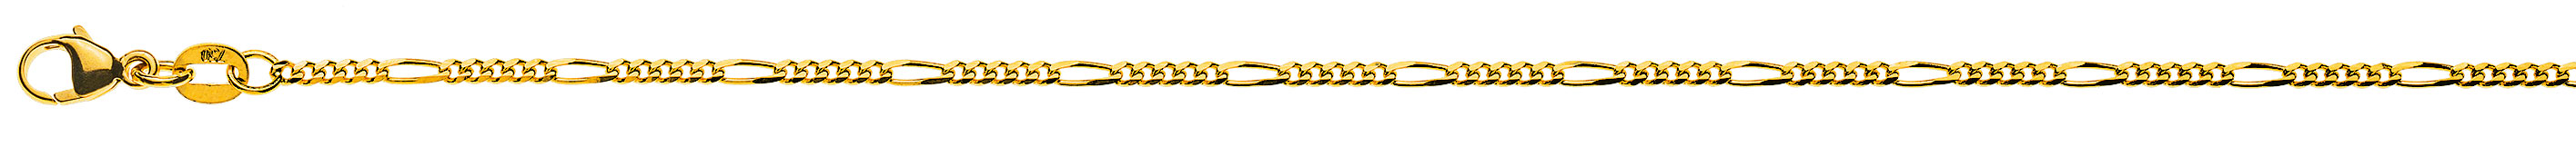 AURONOS Prestige Necklace yellow gold 18K Figaro chain 5+1 links 45cm 1.8mm